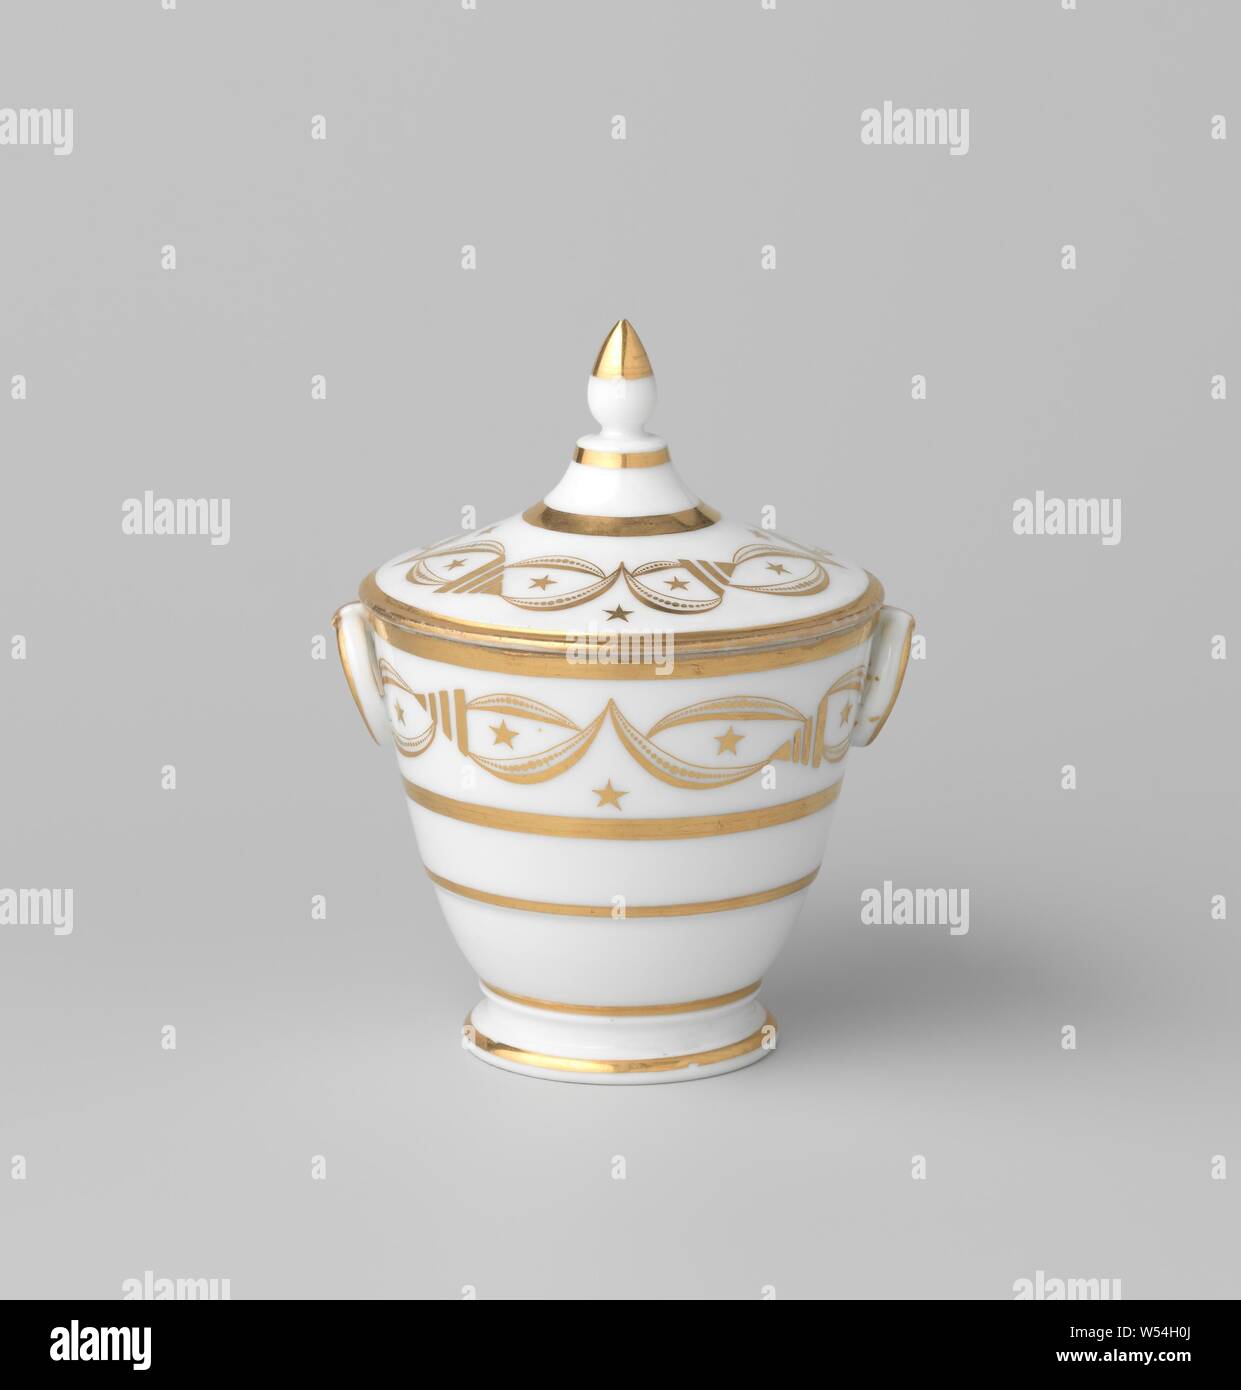 Cover or sugar bowl with ornamental borders, France, c. 1800 - c. 1824, porcelain, glaze, gold (metal), vitrification, h 6.4 cm d 11.3 cm Stock Photo